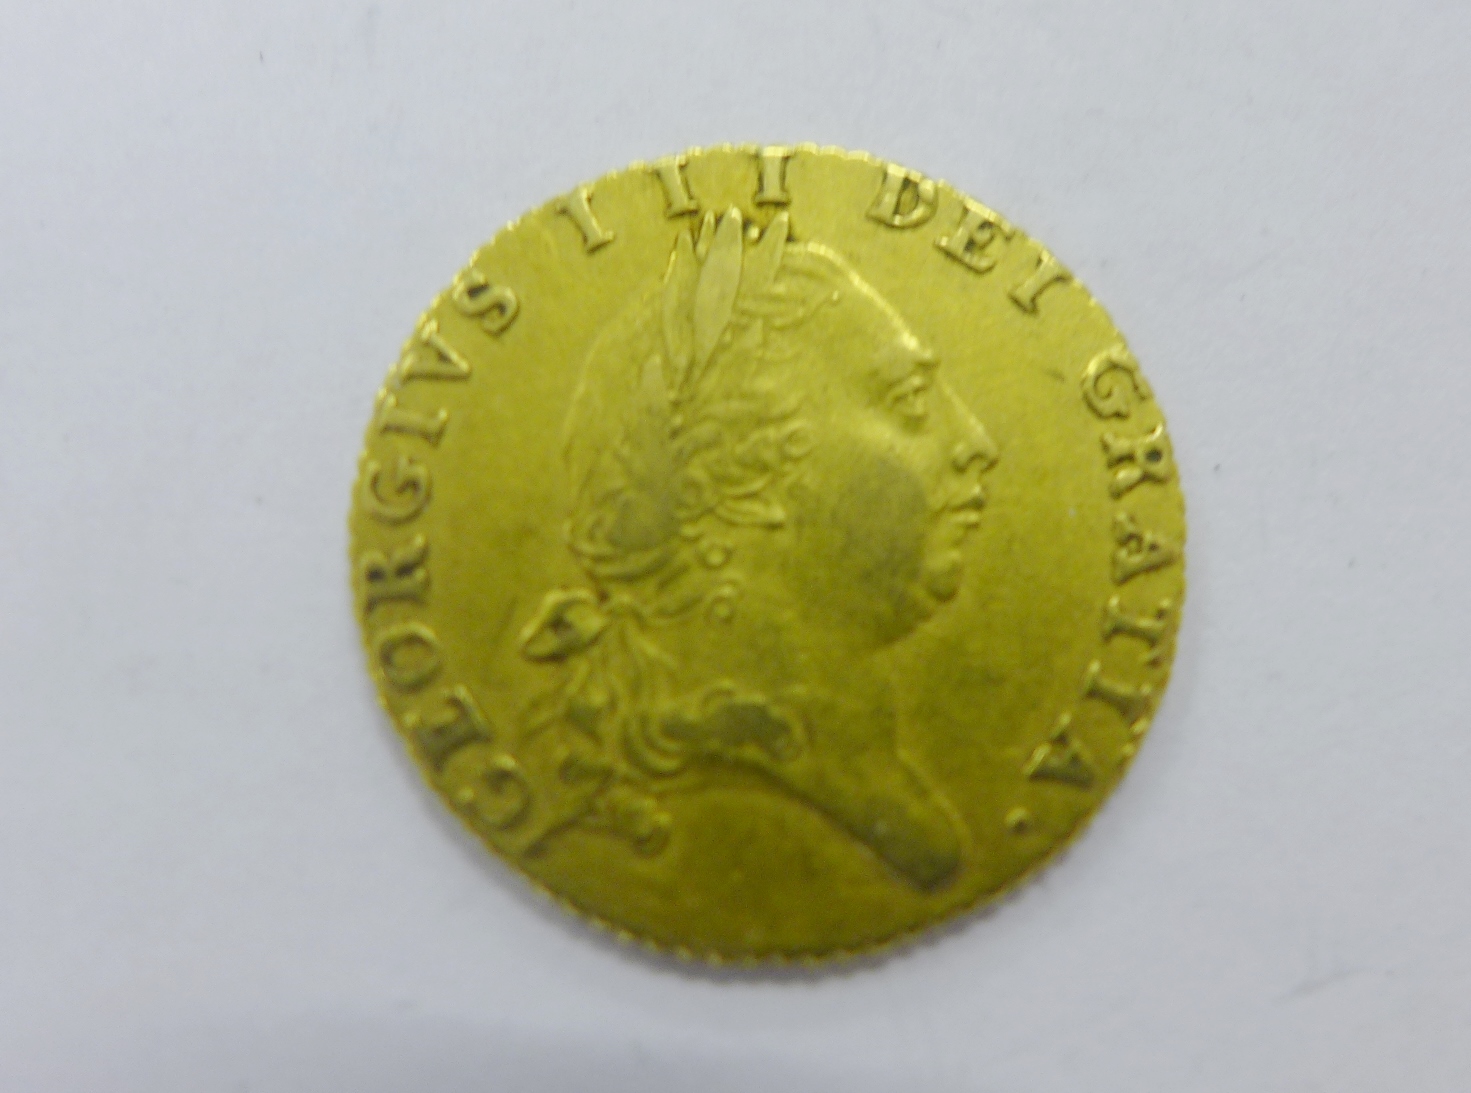 George III gold half guinea, dated 1787